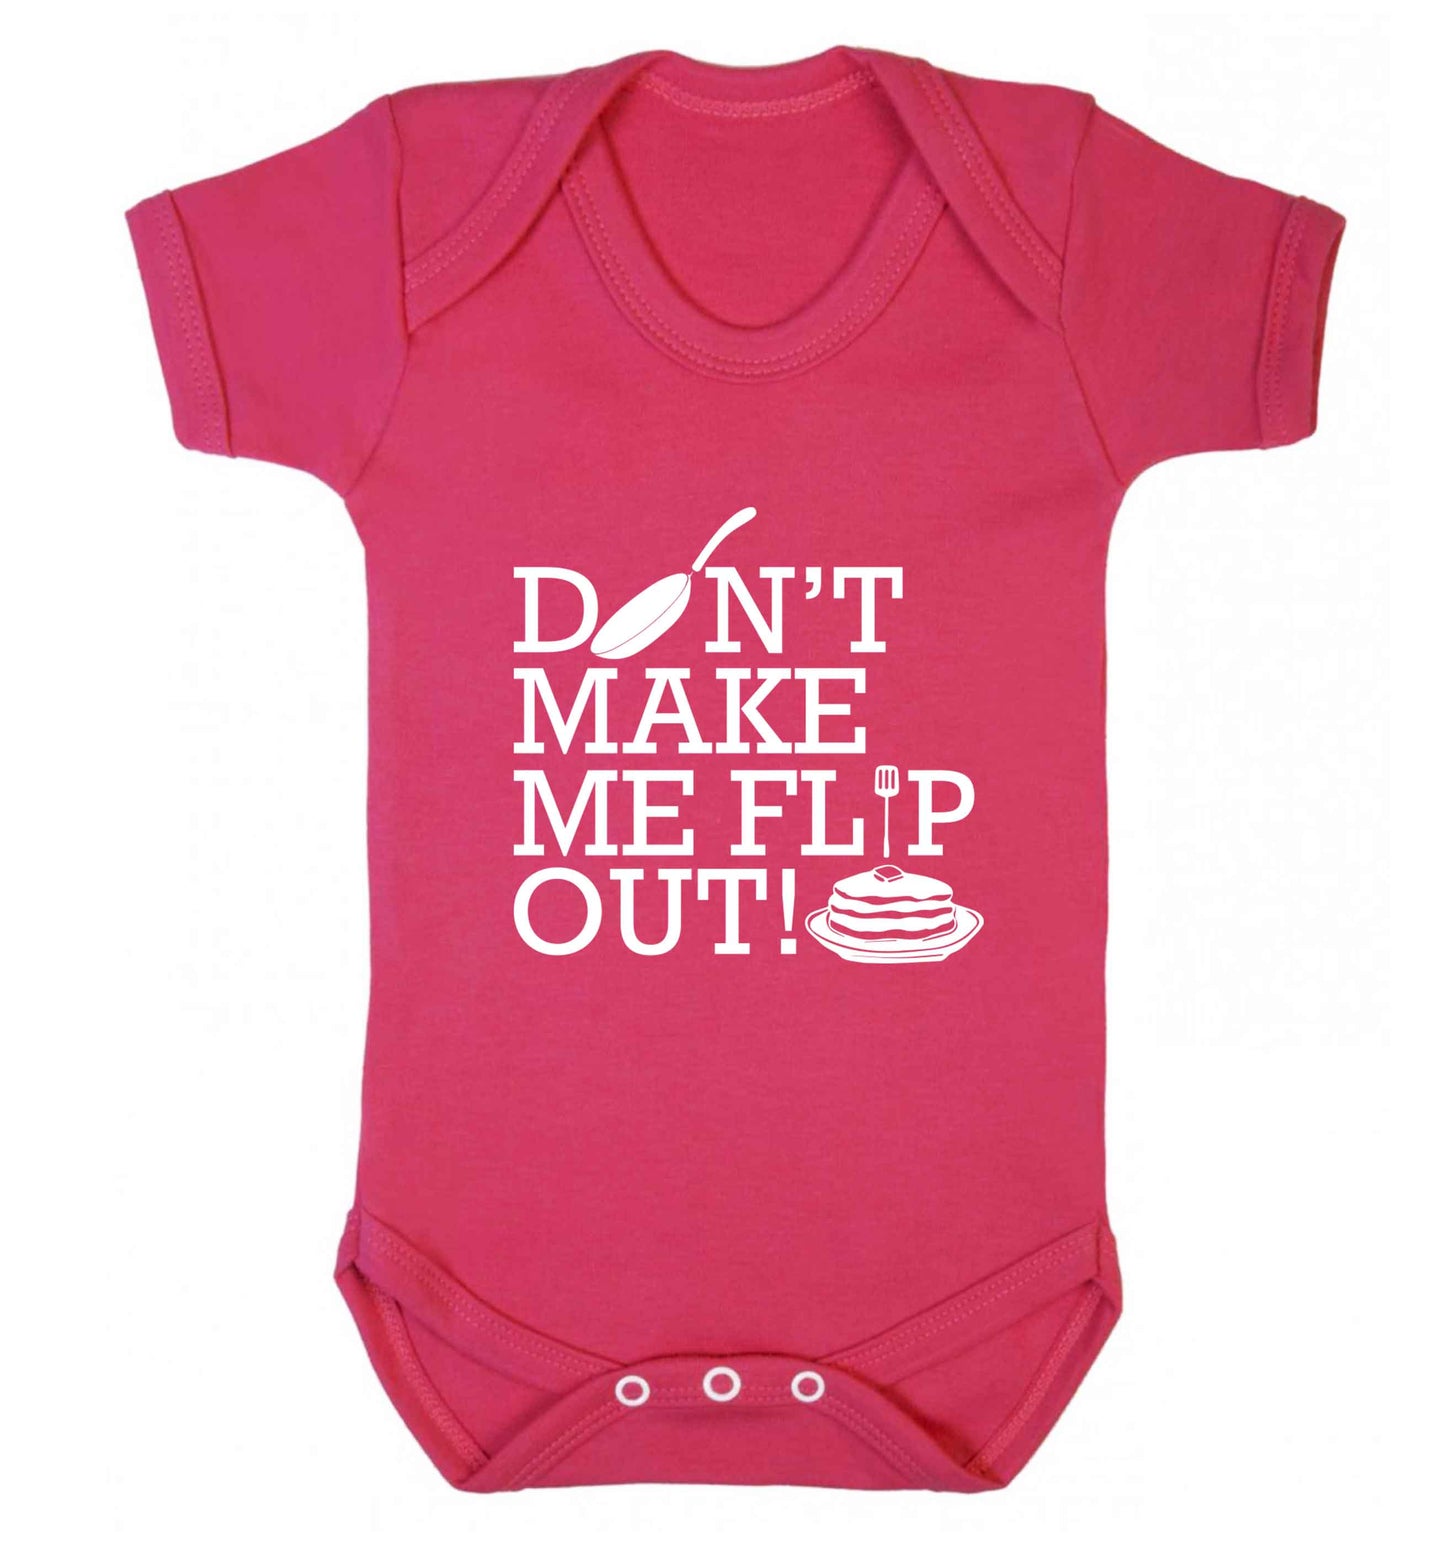 Don't make me flip out baby vest dark pink 18-24 months